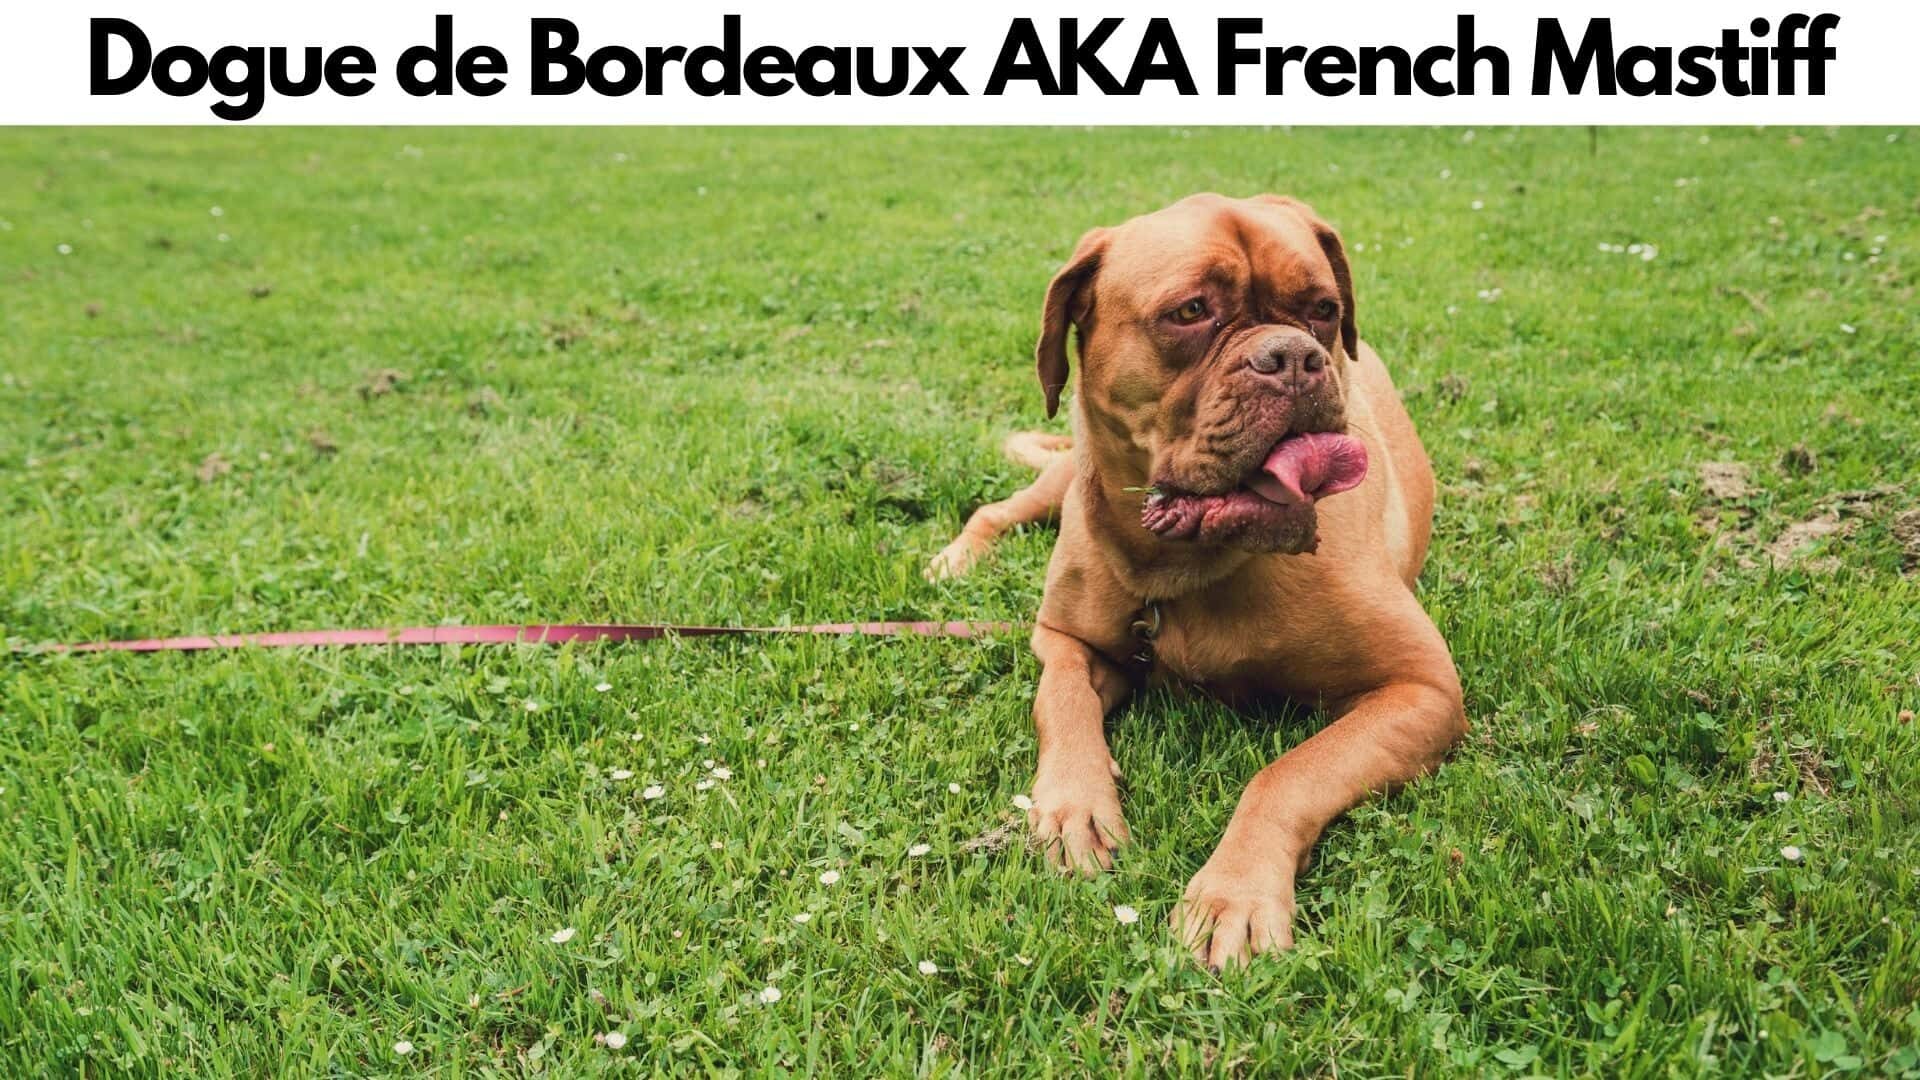 Dogue de Bordeaux AKA French Mastiff